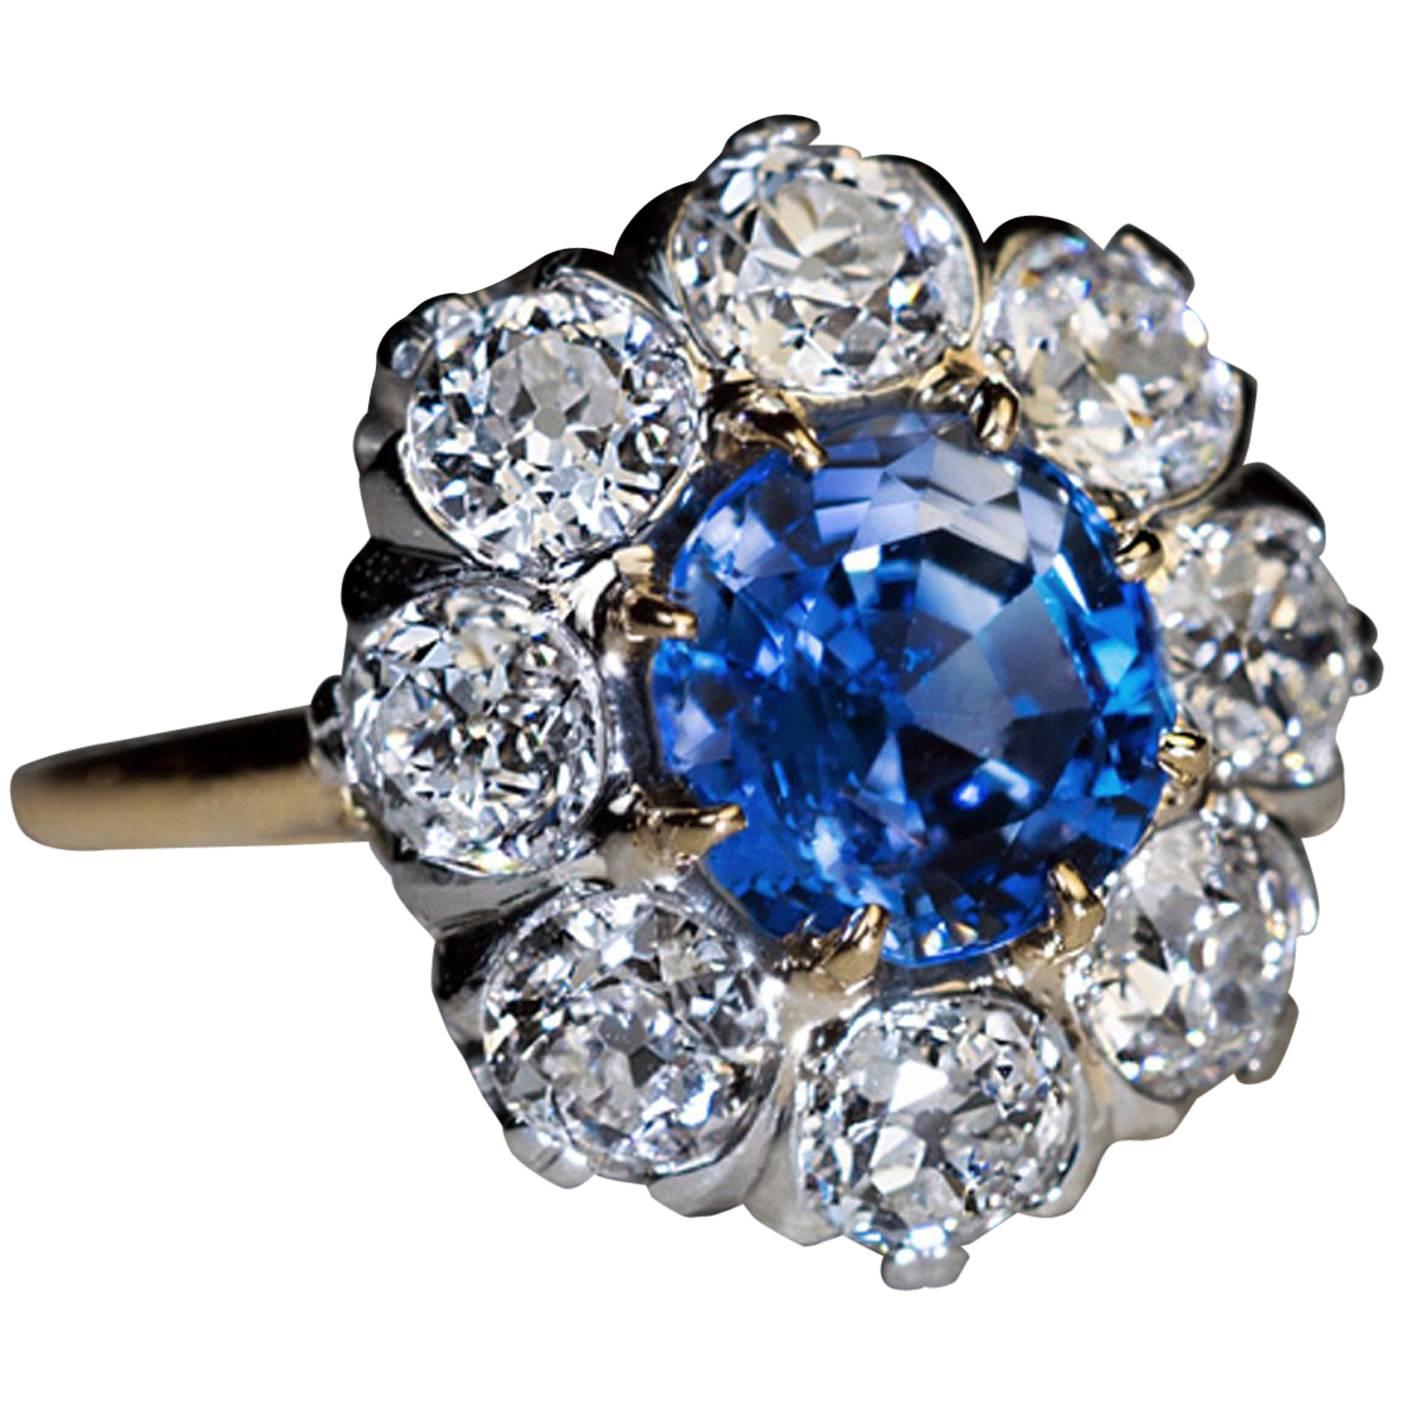 Antique 2.24 Carat Sapphire Diamond Cluster Engagement Ring